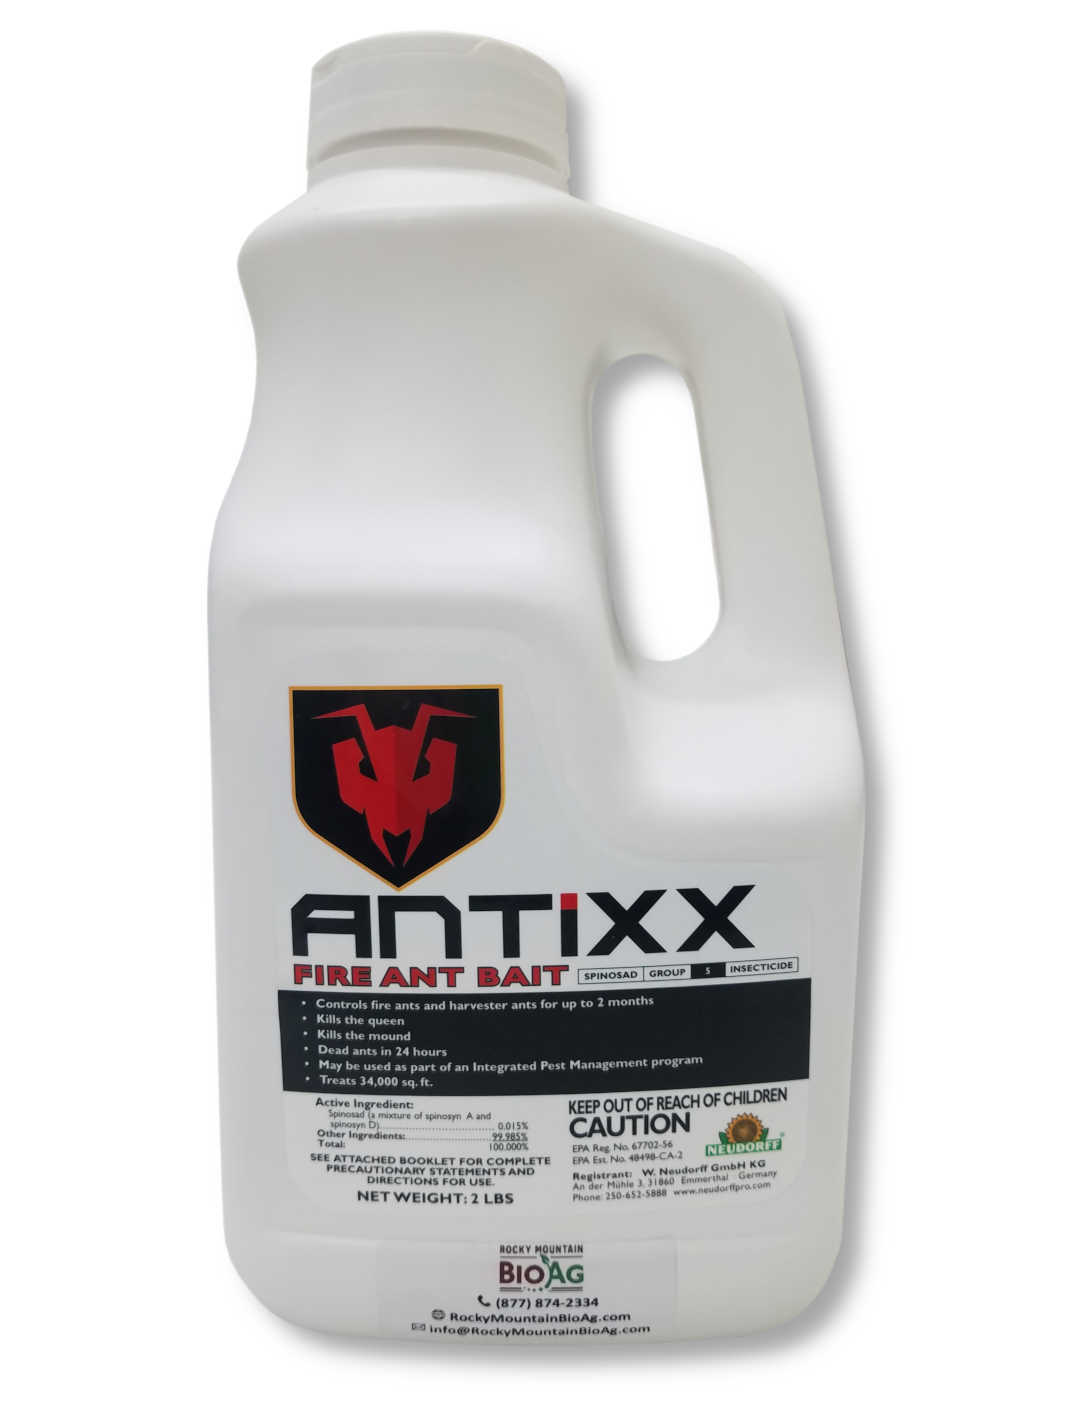 2lb of Antixx Fire Ant Bait